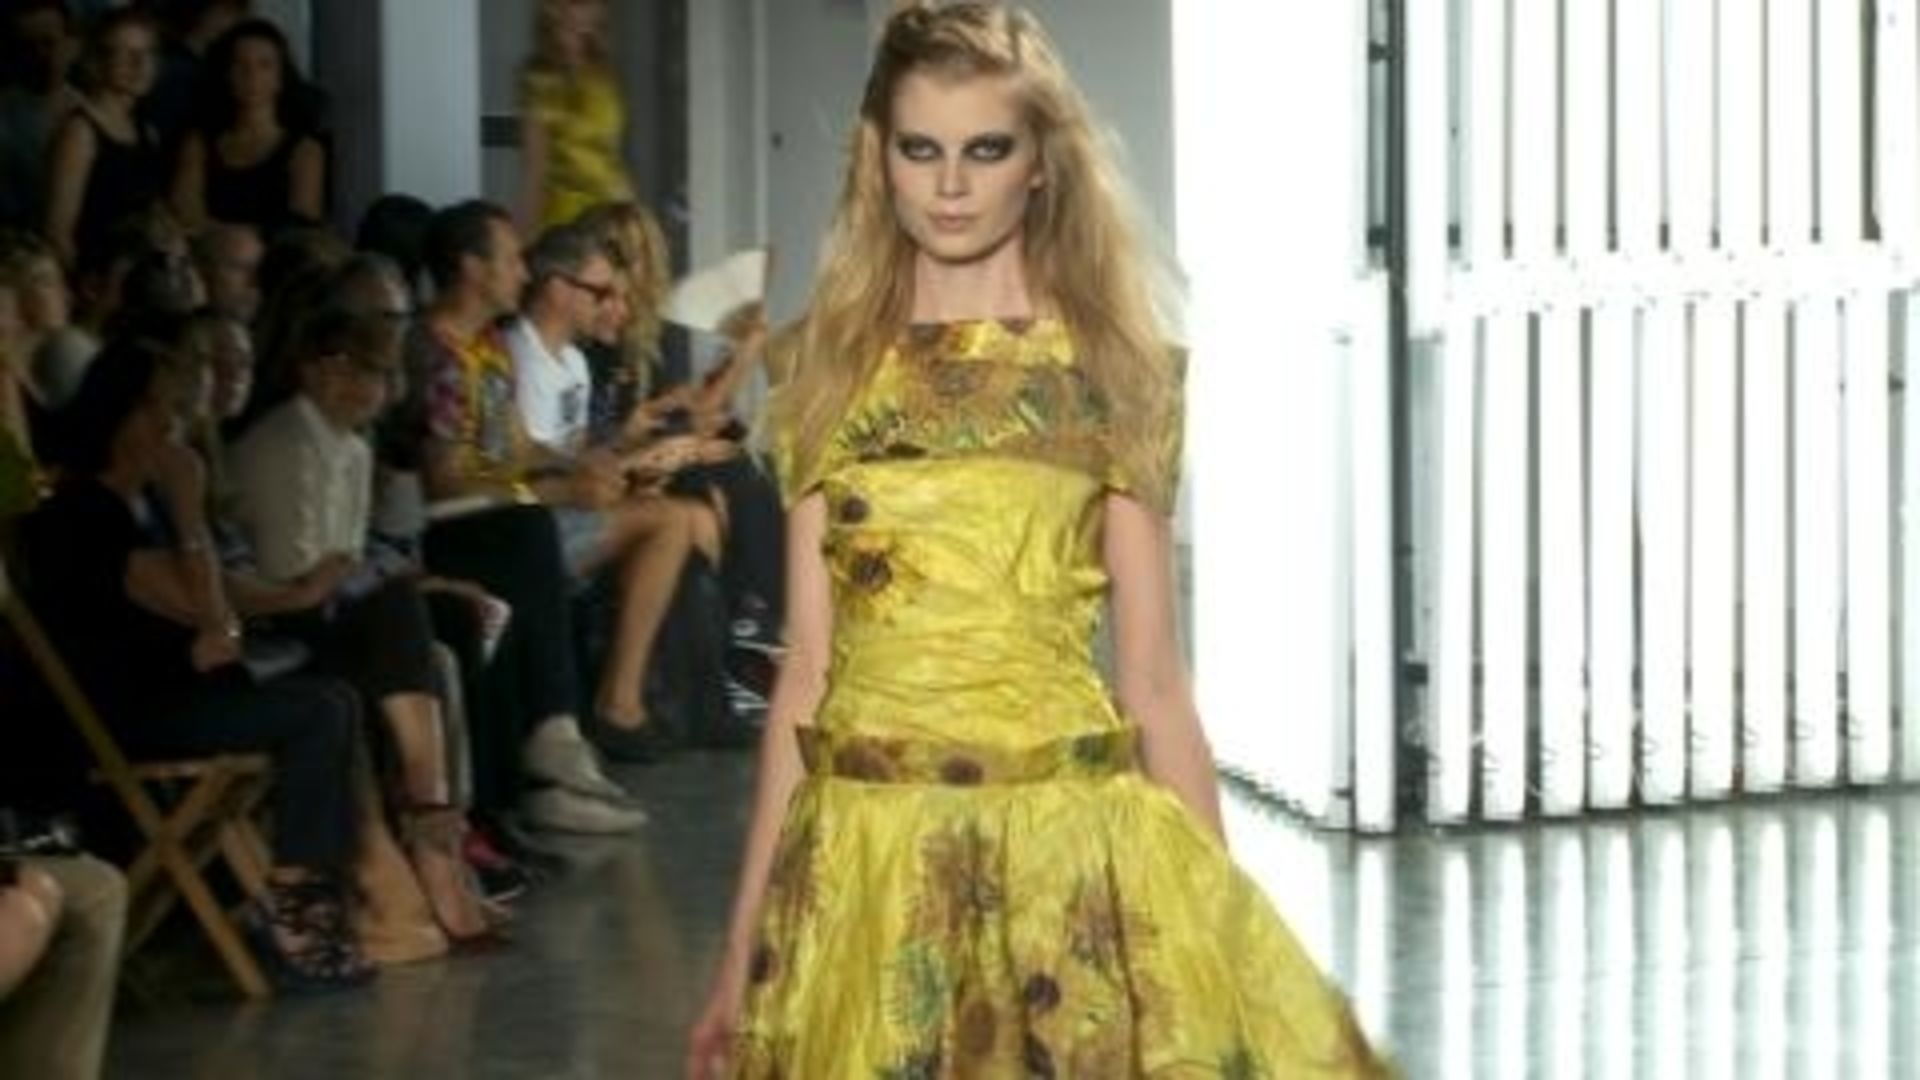 Louis Vuitton S/S 2012 Fashion Show Inspired Makeup Tutorial 